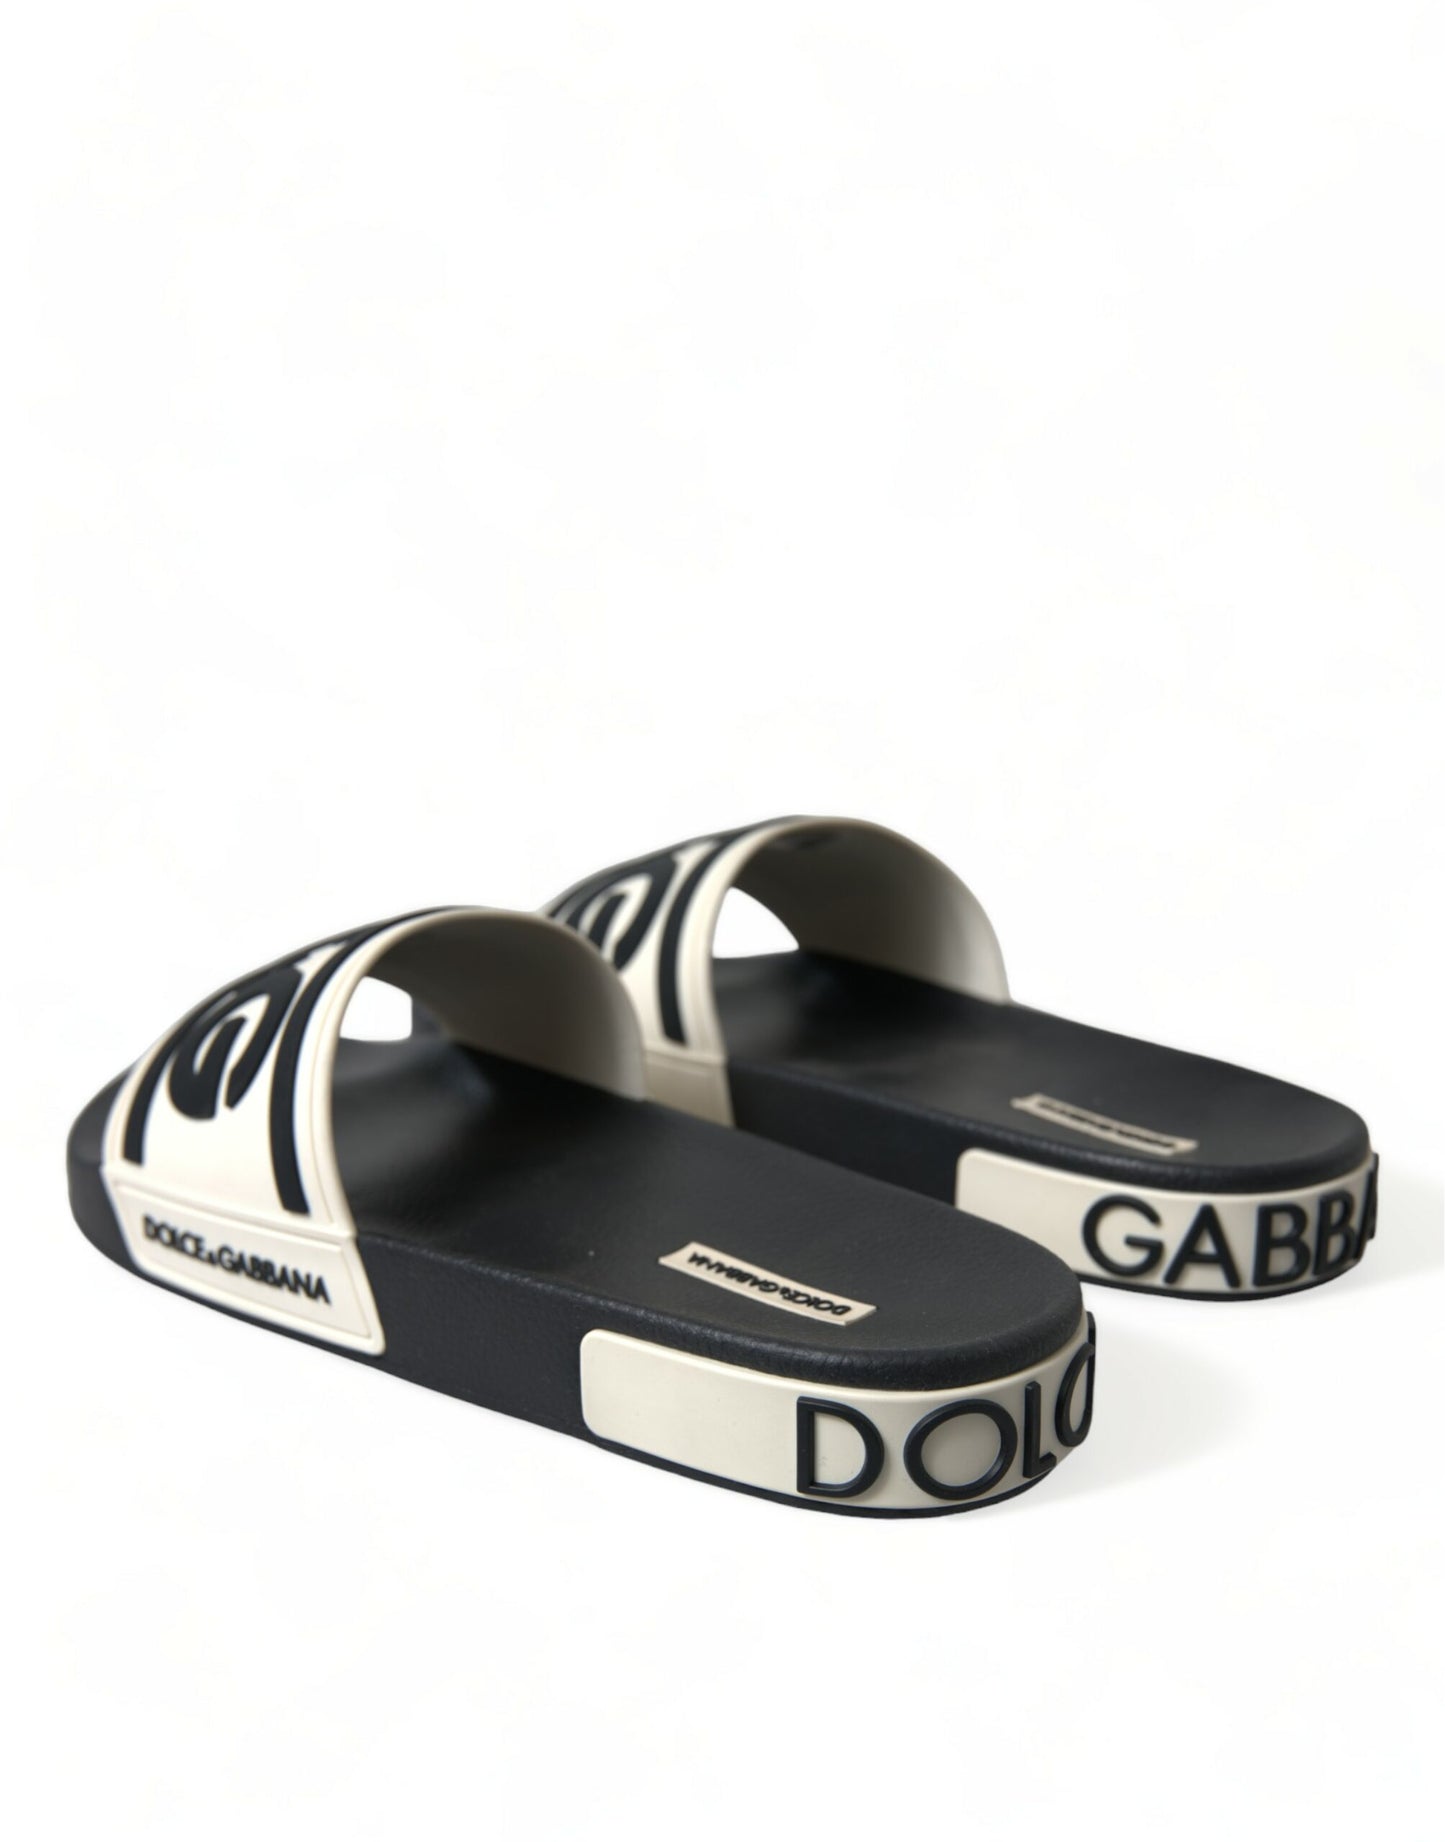 Dolce & Gabbana Elegant Monochrome Rubber Beachwear Slides